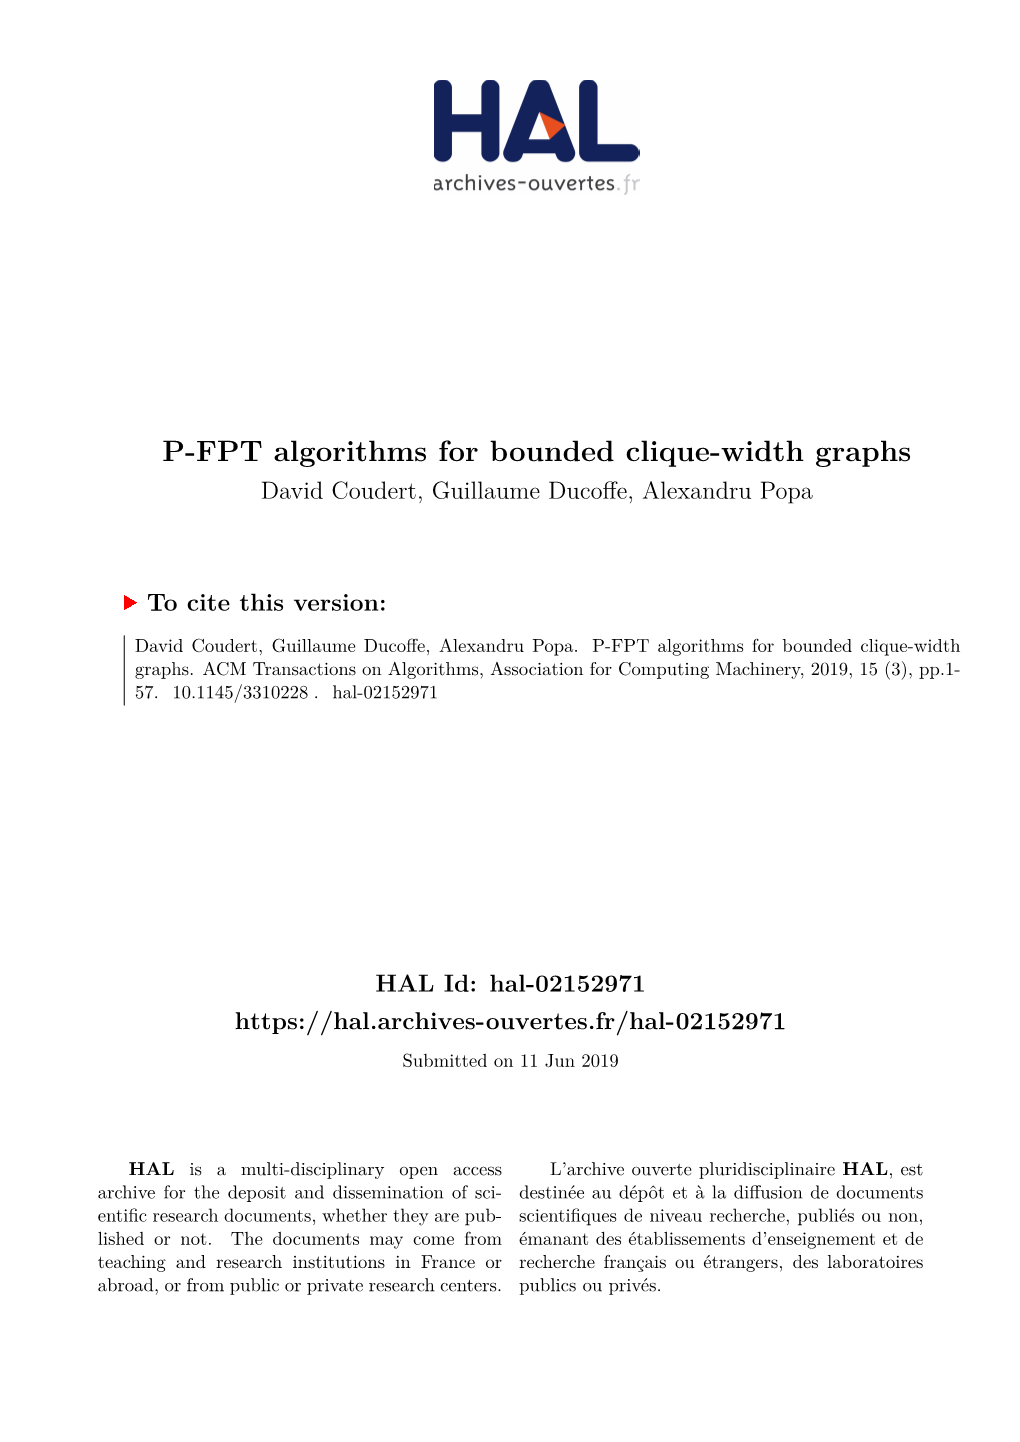 P-FPT Algorithms for Bounded Clique-Width Graphs David Coudert, Guillaume Ducoffe, Alexandru Popa